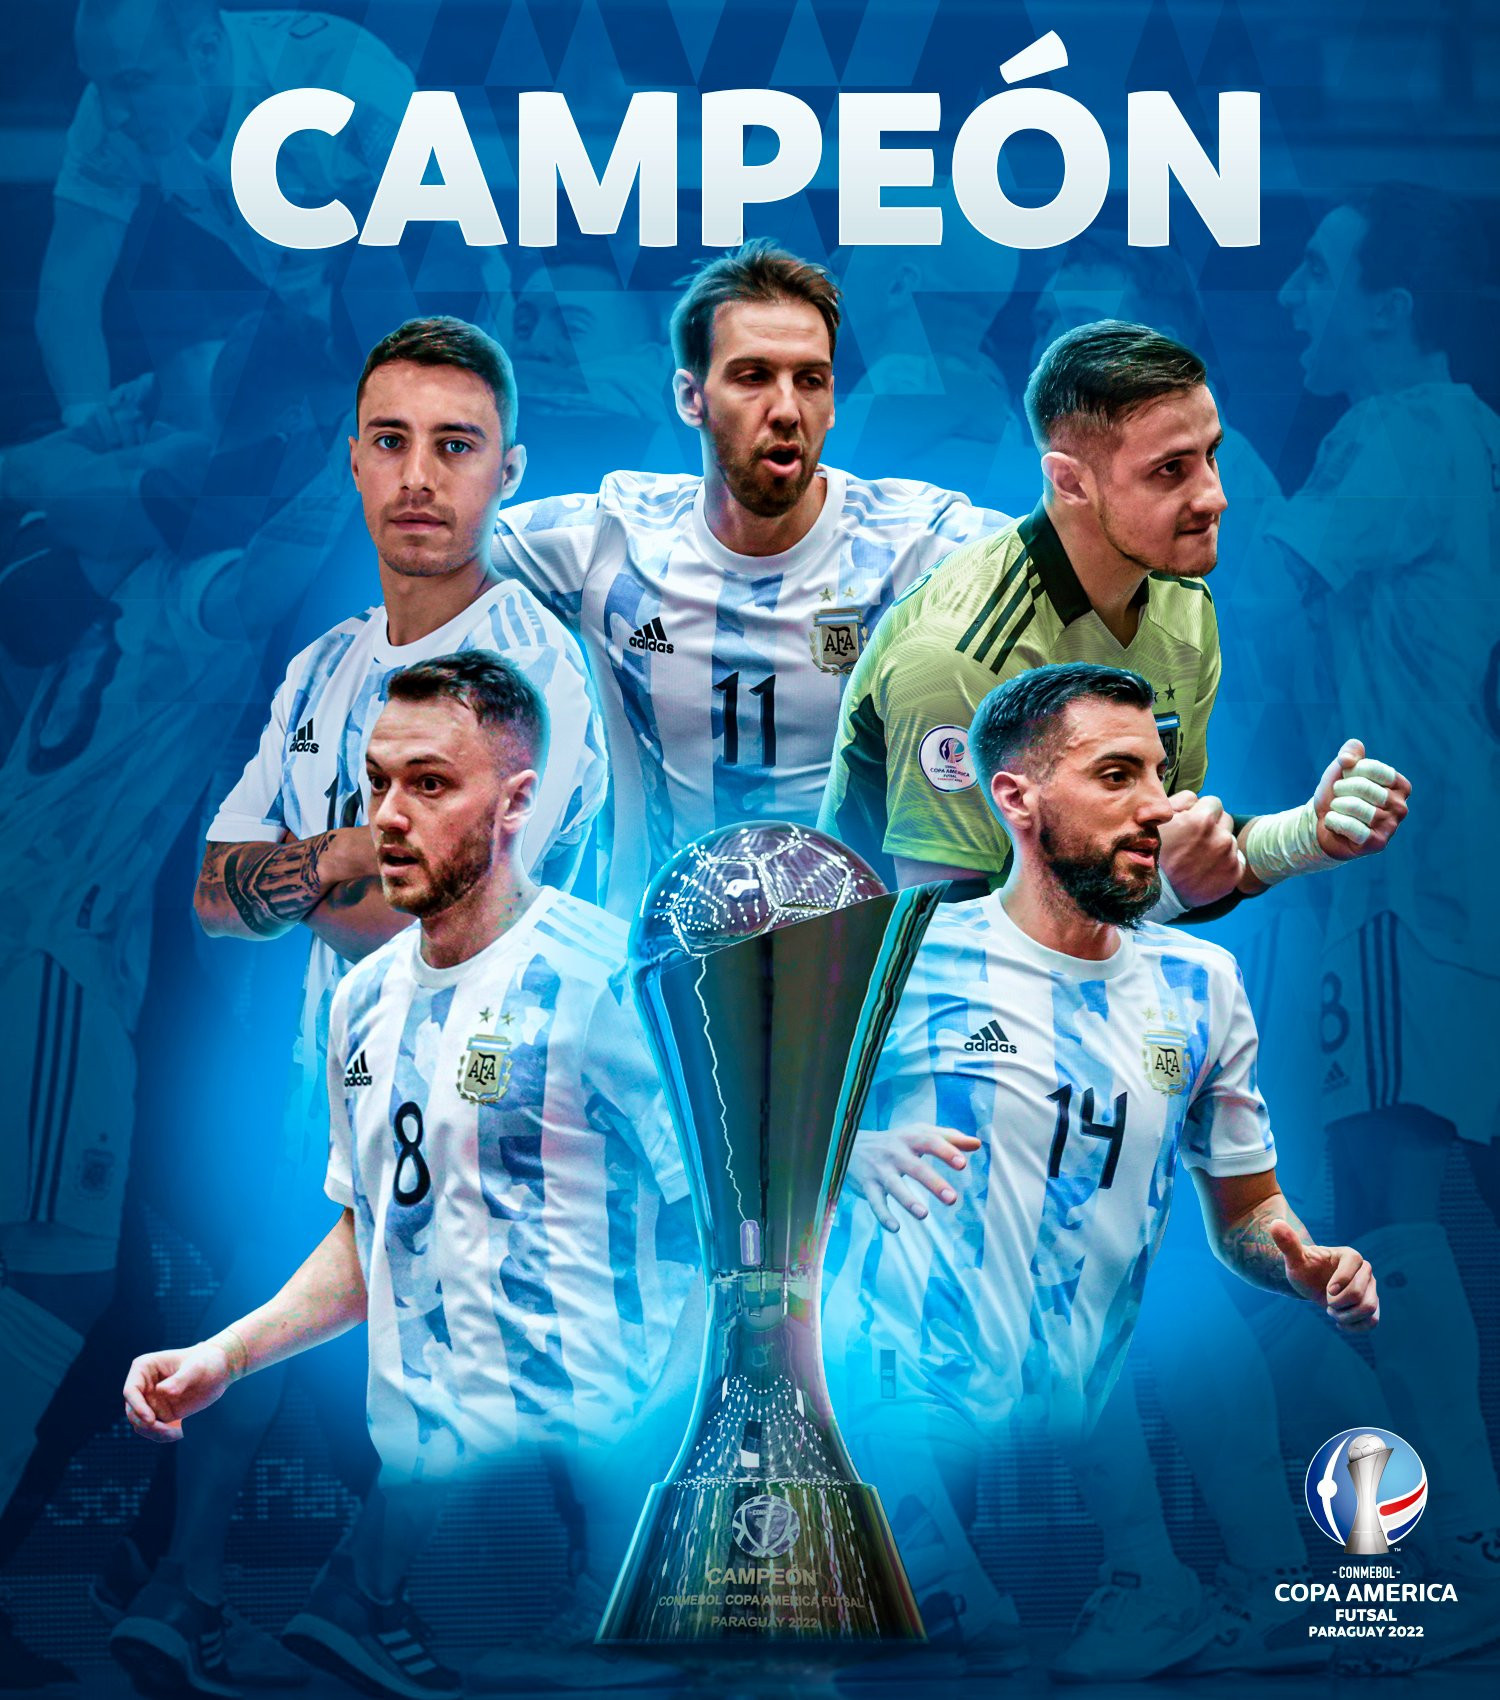 Argentina narrowly beat Paraguay to win Copa América de Futsal